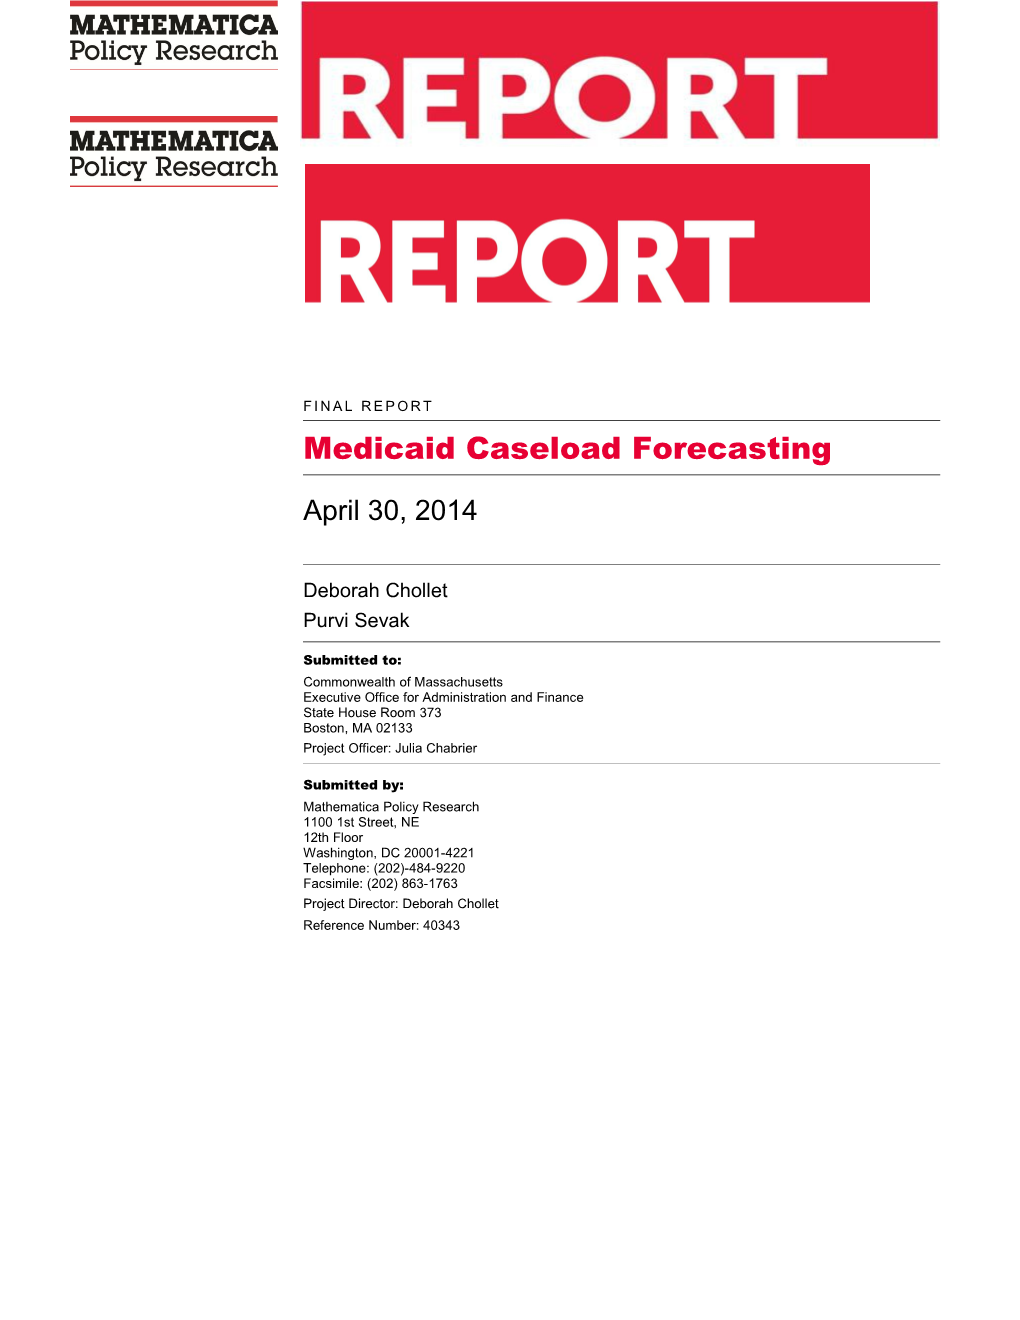 Medicaid Caseload Forecasting